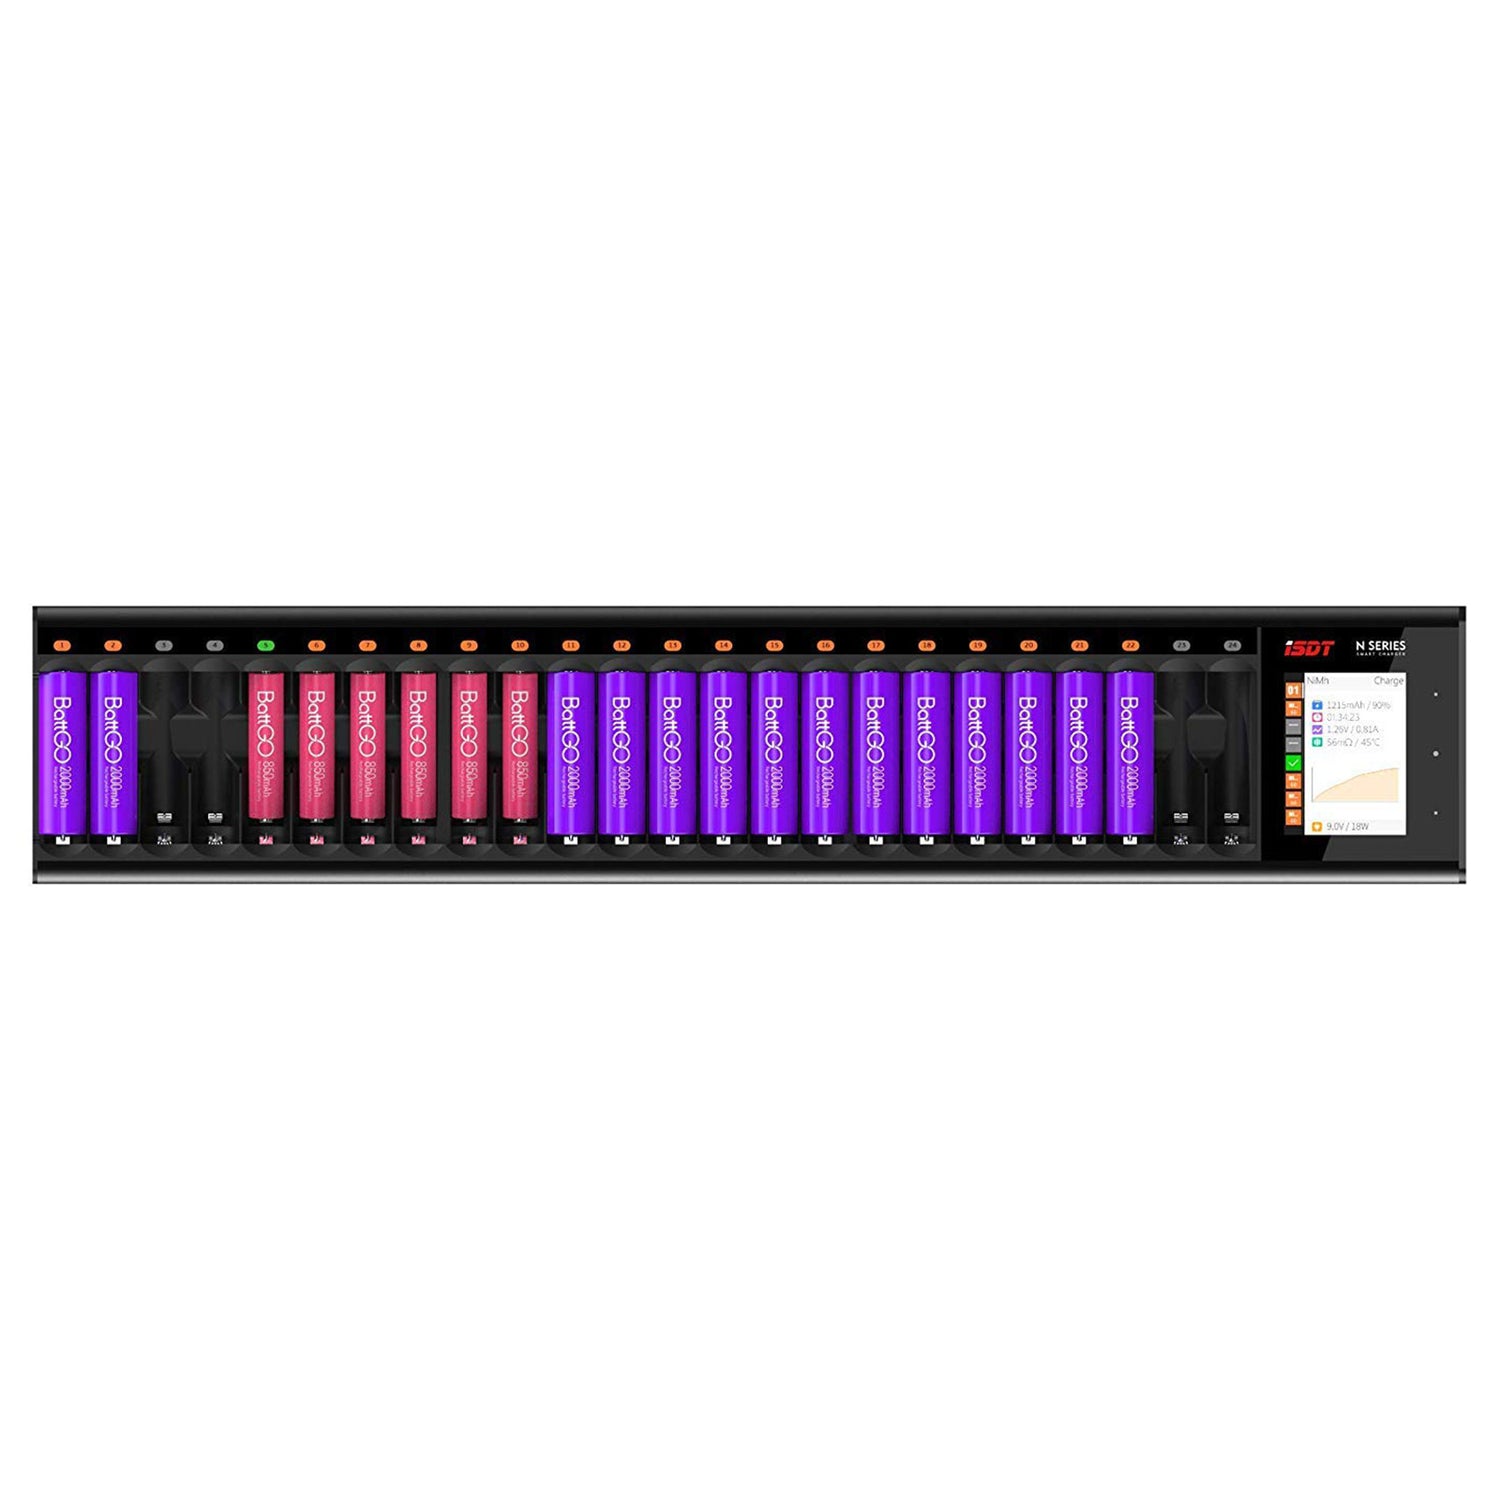 N24 CARREGADOR DE BATERIA LCD 24 SLOT para baterias recarregáveis, carregador rápido de 48W para baterias AA/AAA